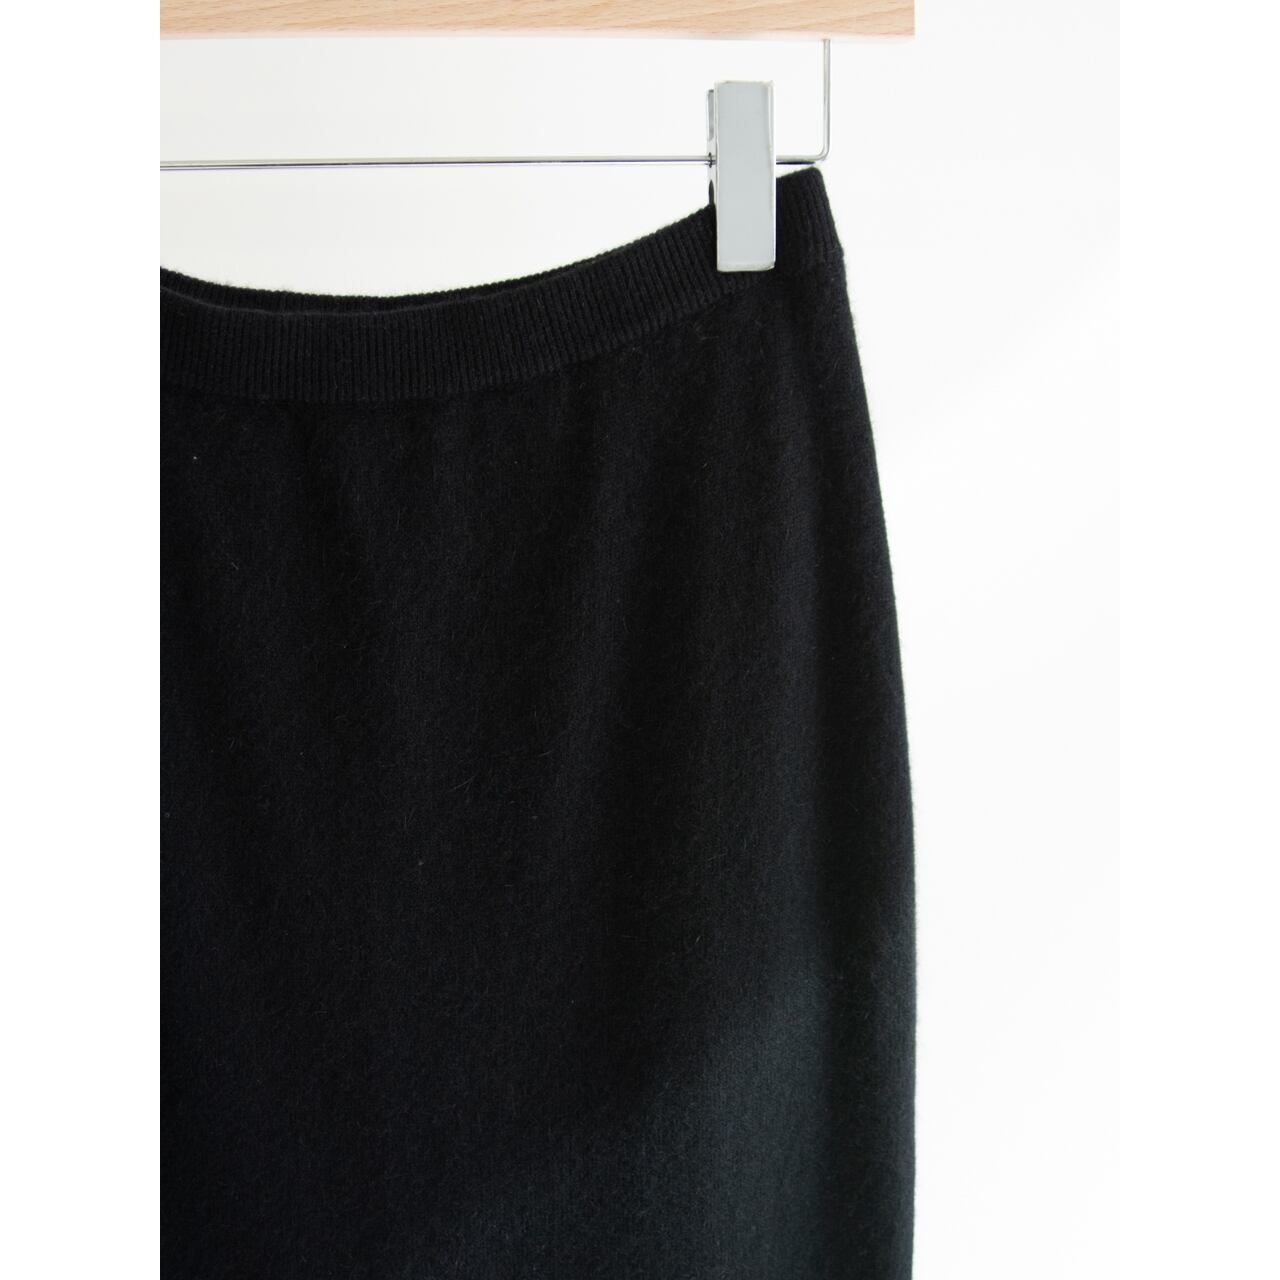 Poi by Krizia】Made in Italy Lambswool-Angora-Nylon Knit Skirt